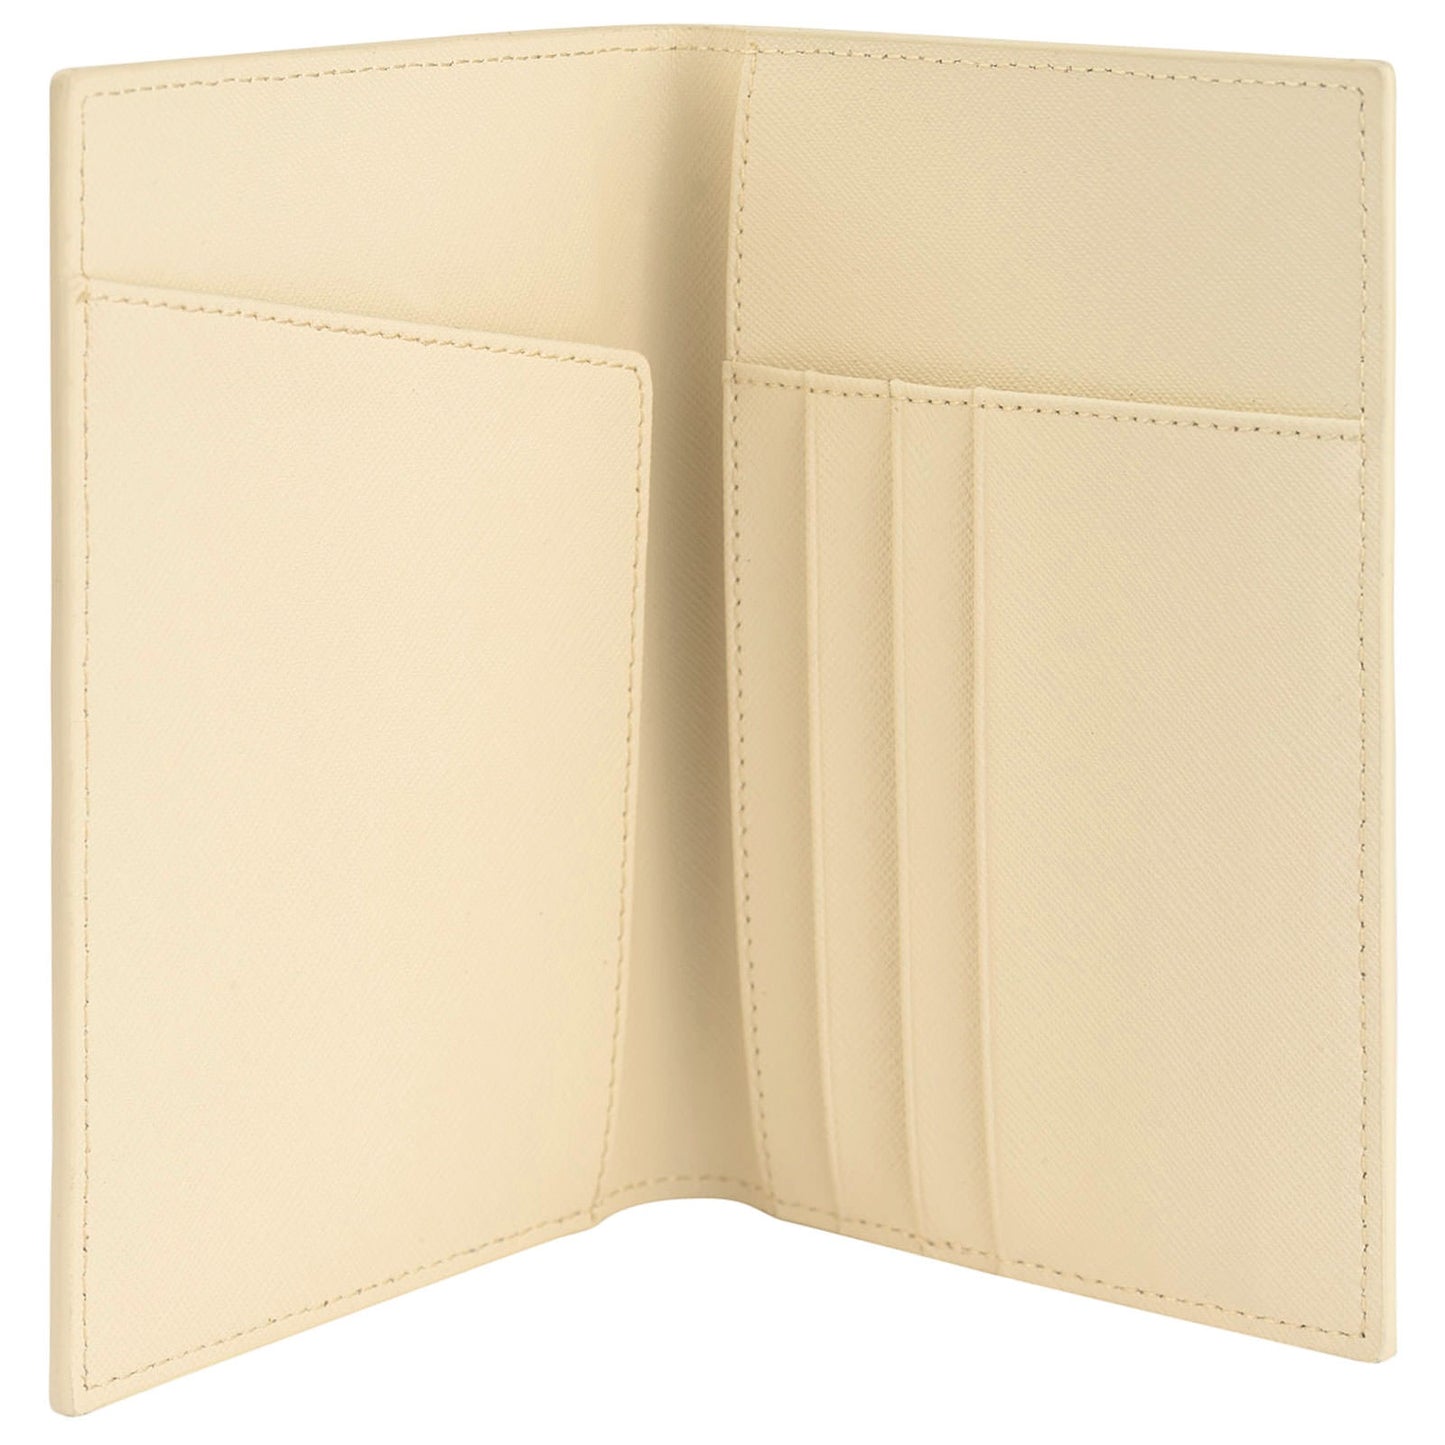 Personalised Ivory Saffiano Leather Passport Holder Inside Pocket